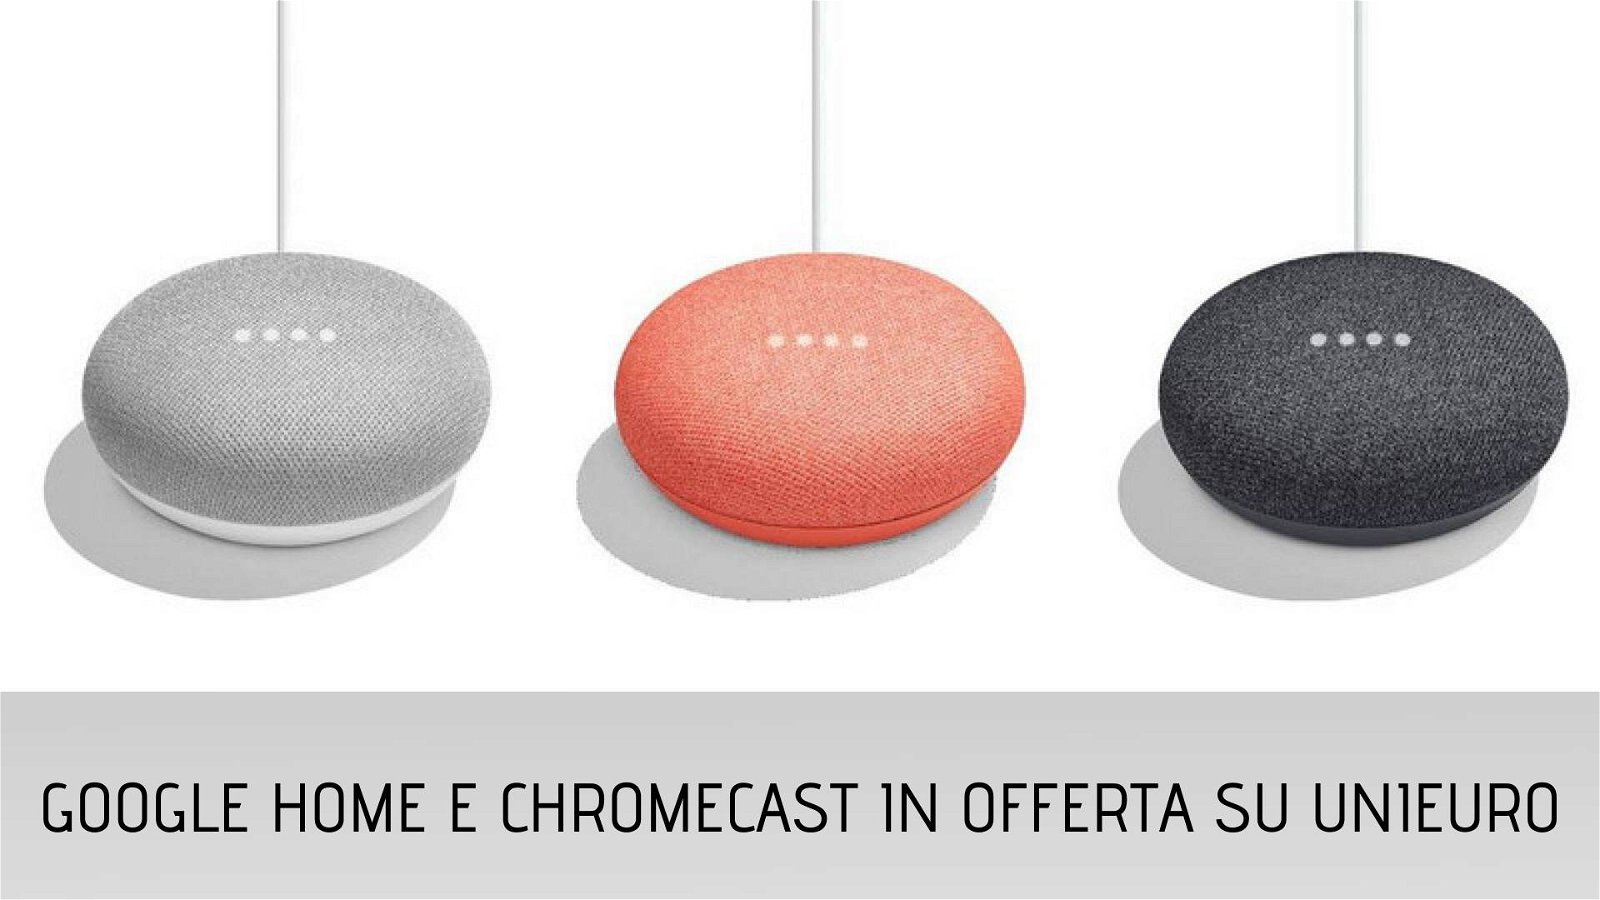 Immagine di Google Home e Chromecast, super offerte su Unieuro!